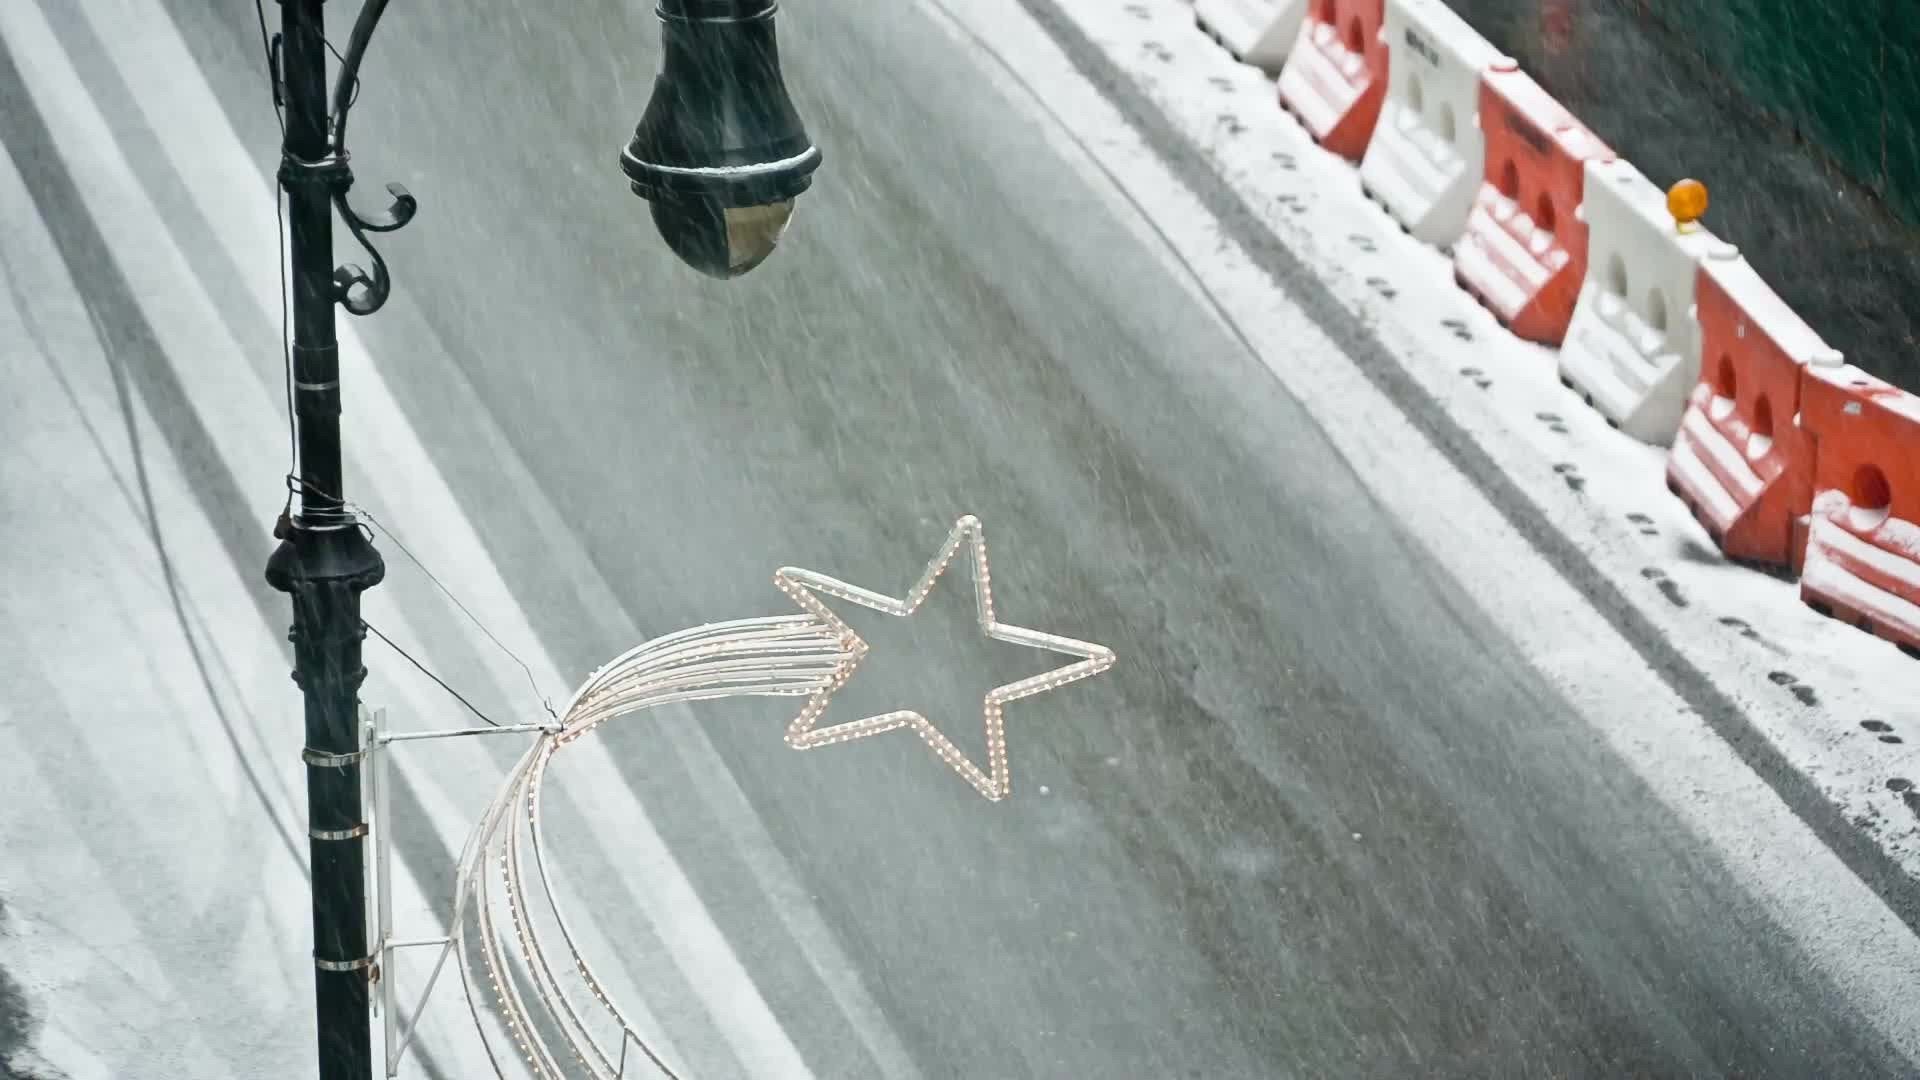 snowing on empty street - holiday season - seamless loop